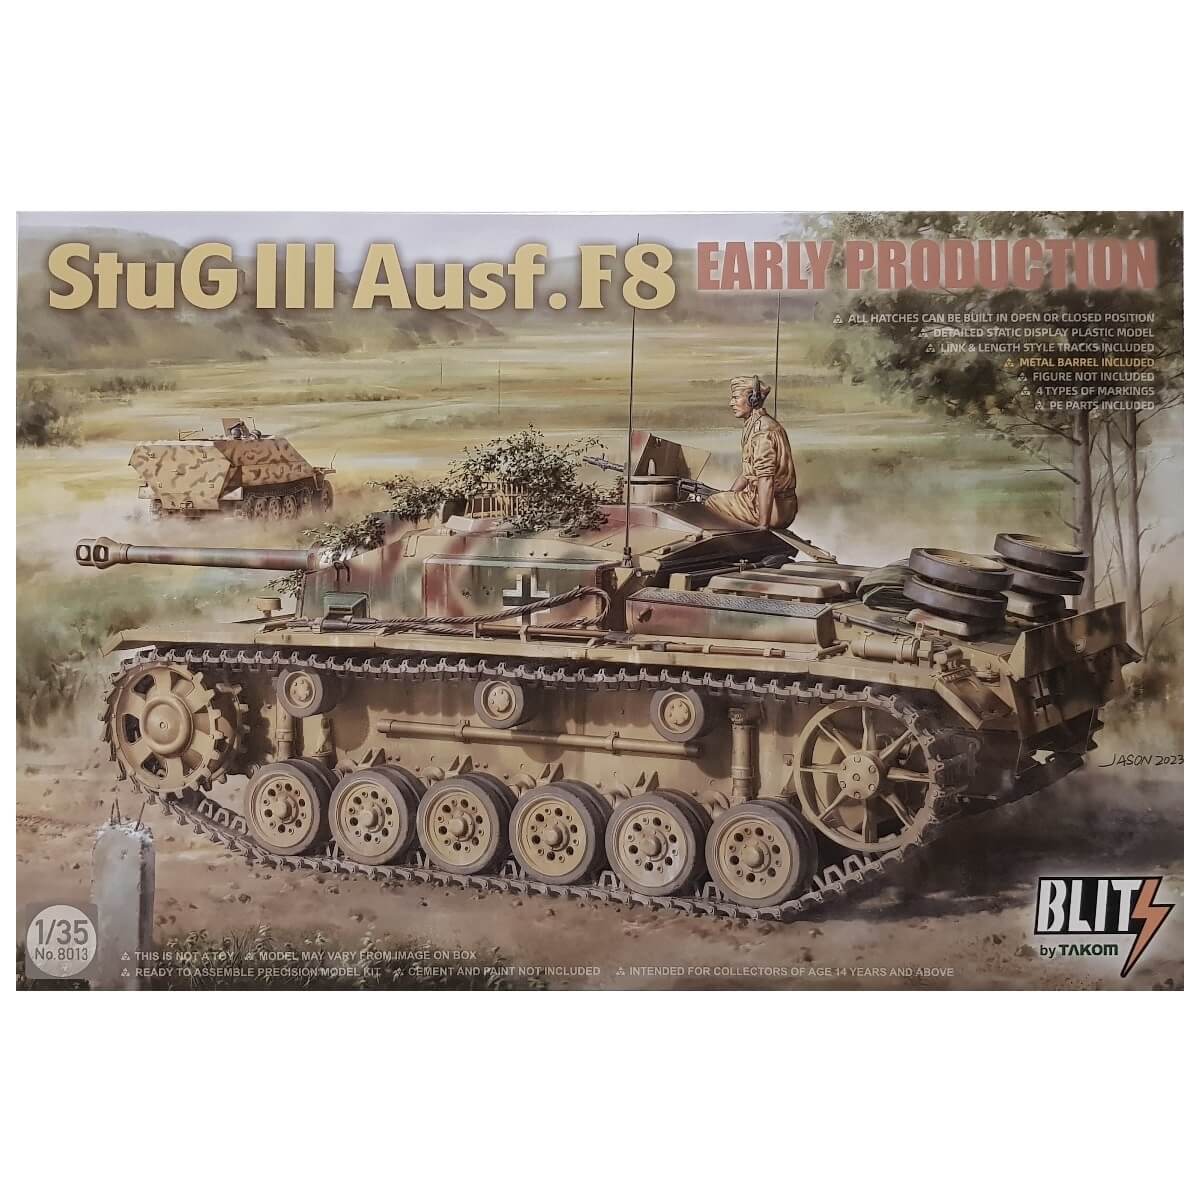 1:35 Stug III Ausf. F8 - Early Production - TAKOM